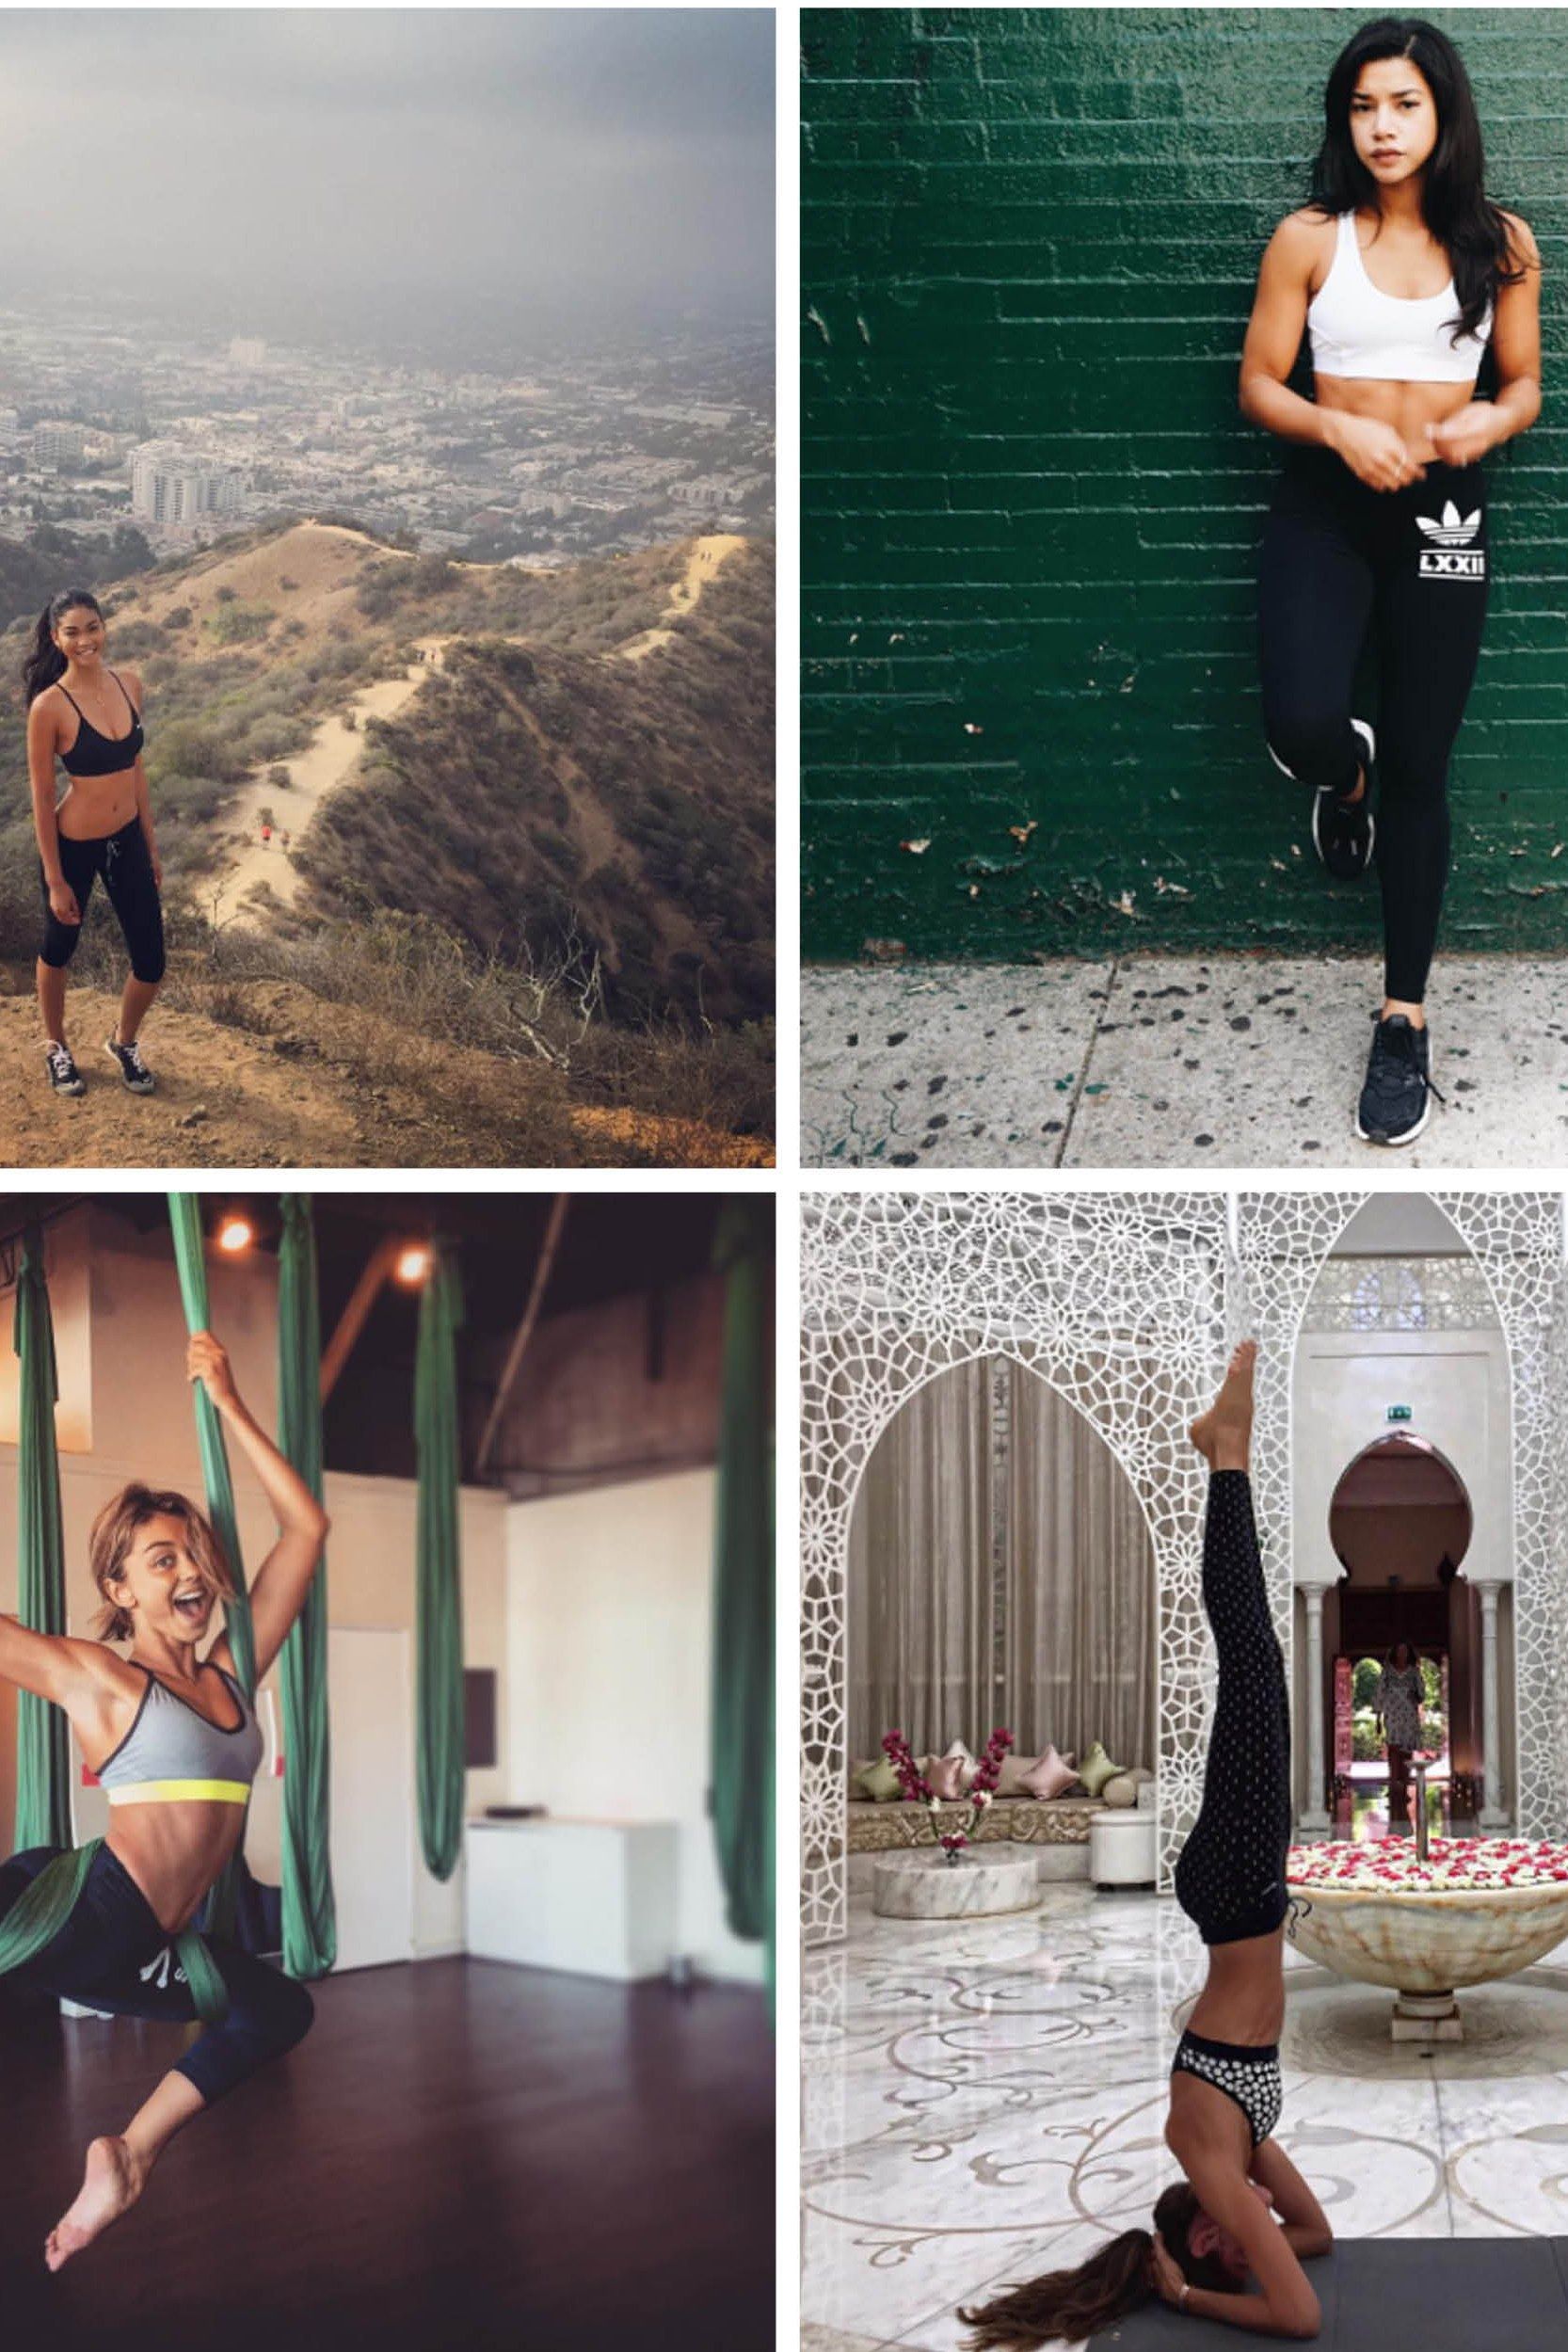 The 25 Most Stylish Fitness Fanatics to Follow on Instagram - The 25 Most Stylish Fitness Fanatics to Follow on Instagram -   15 fitness Instagram to follow ideas